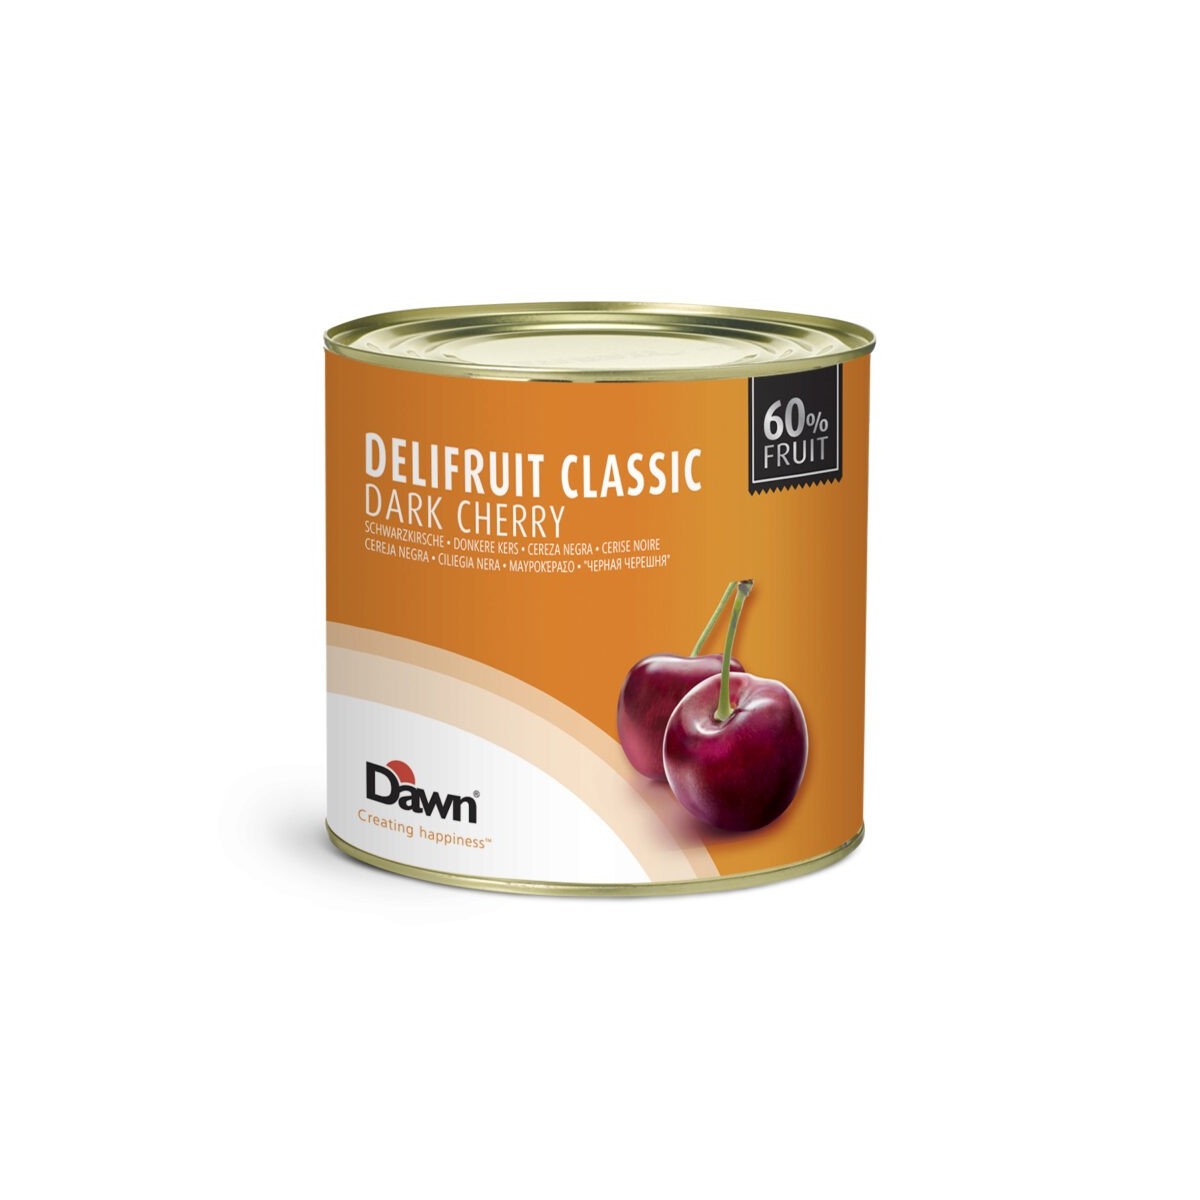 DAWN DELIFRUIT CLASSIC BLACK CHERRIES 3 X 2,7KG  BOX